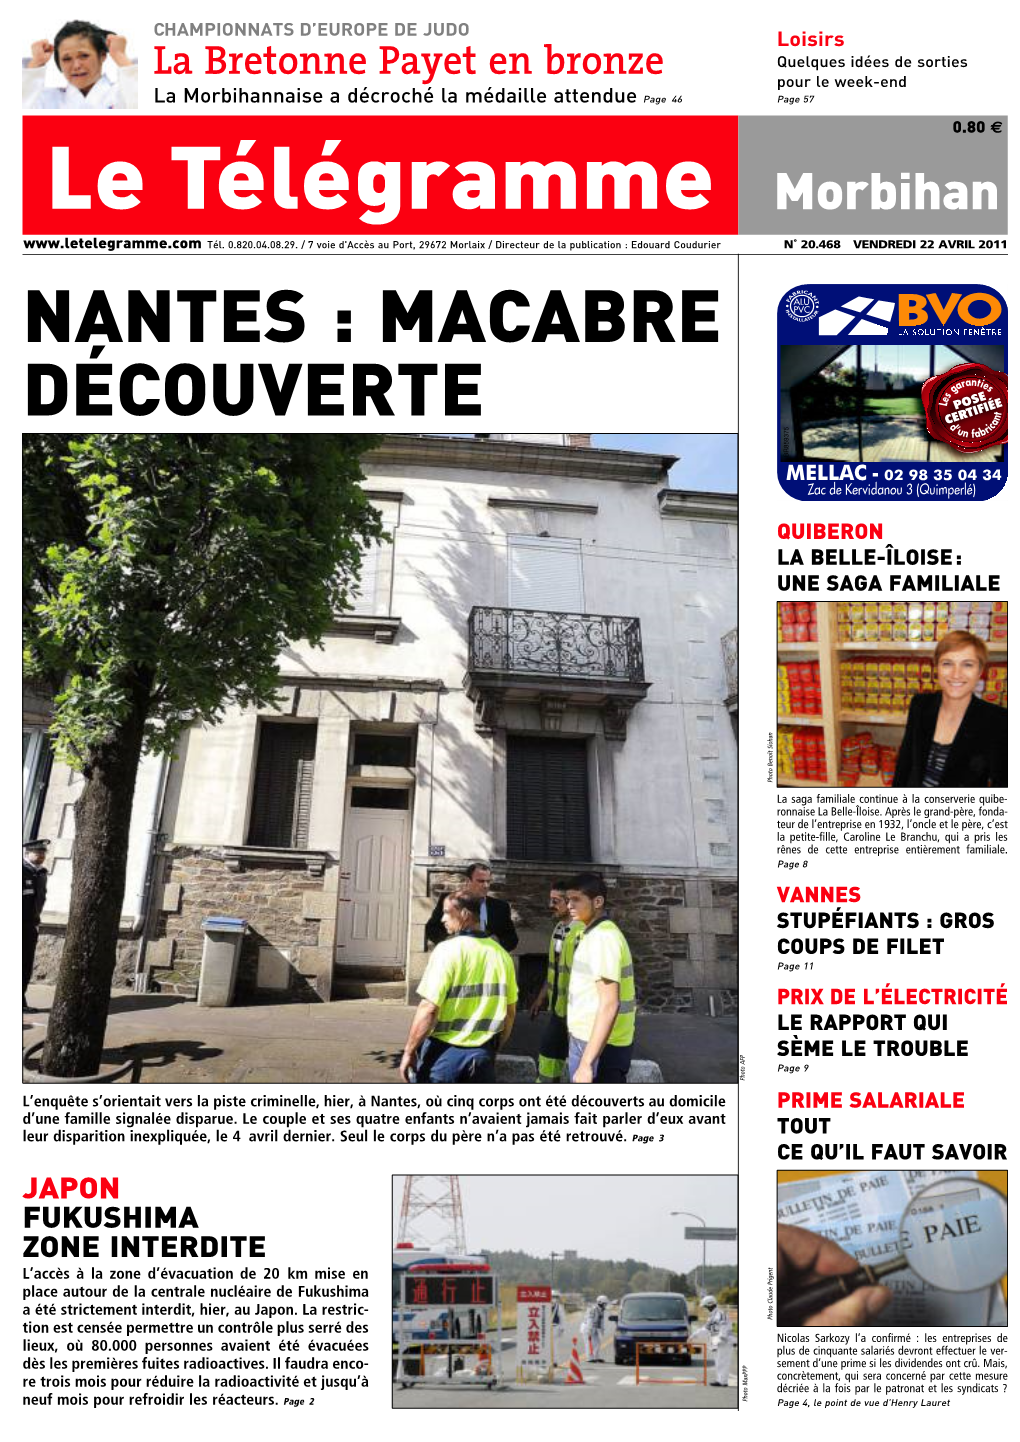 Nantes : Macabre Allat